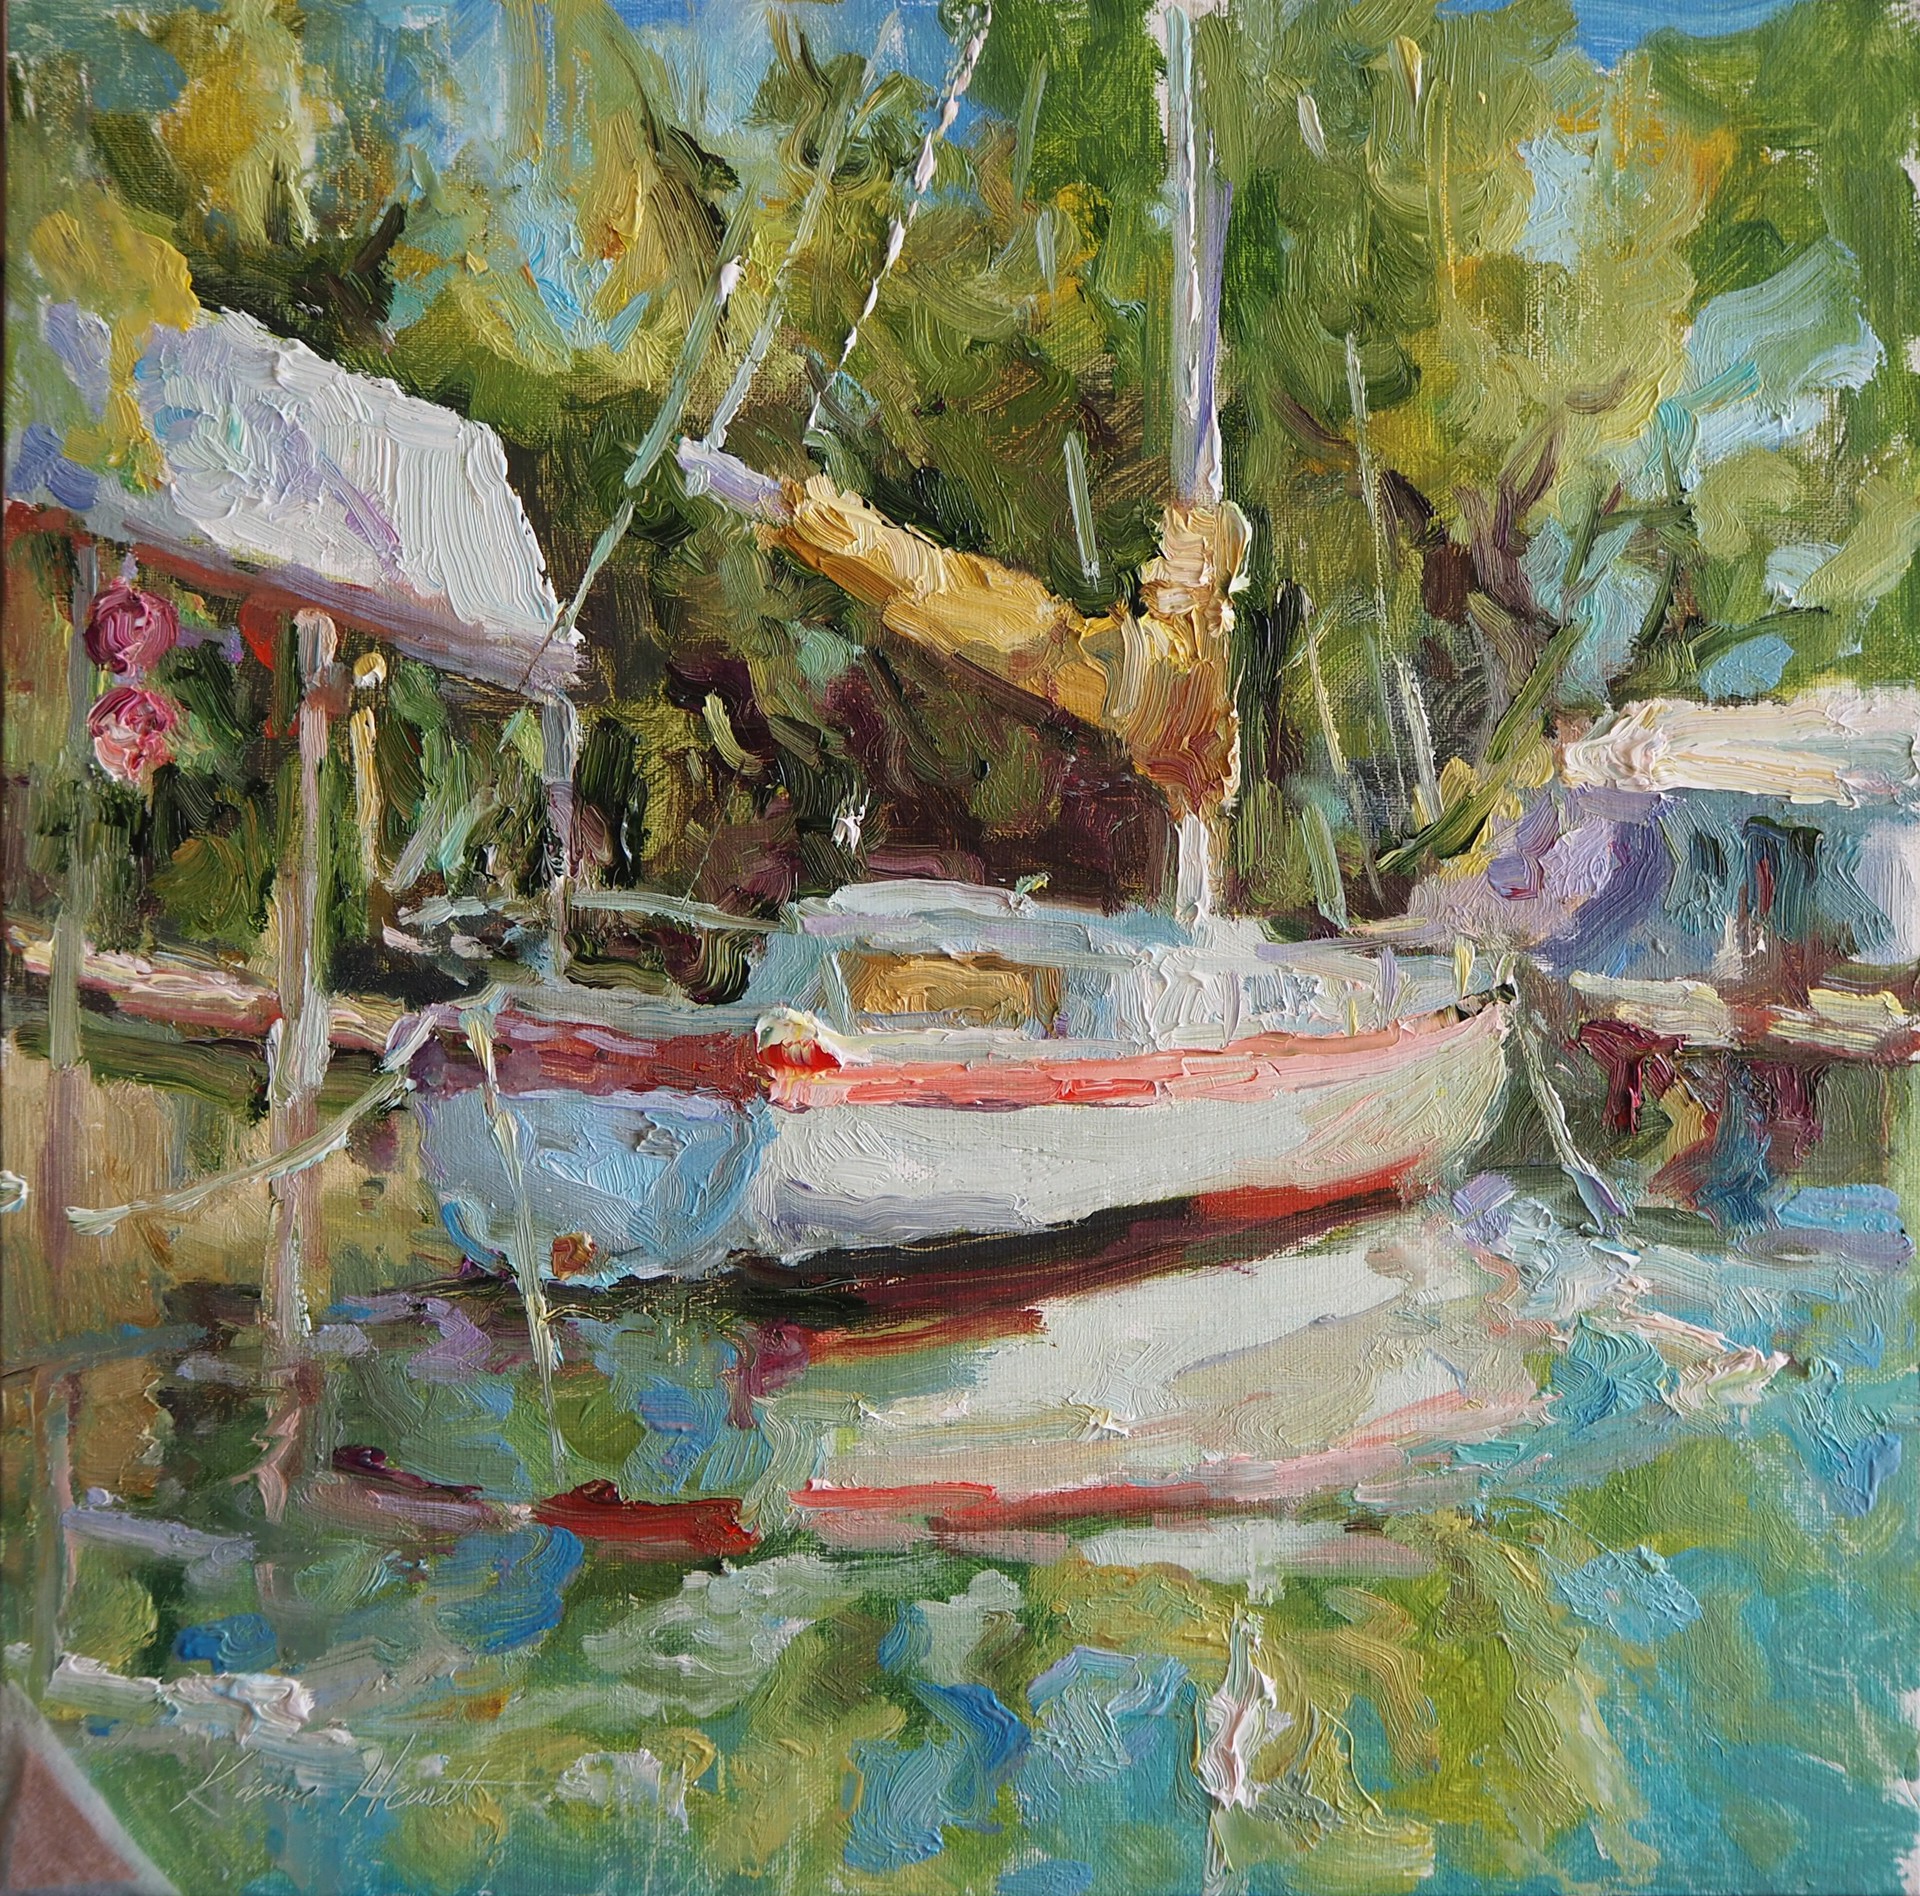 Docked in the Keys by Karen Hewitt Hagan